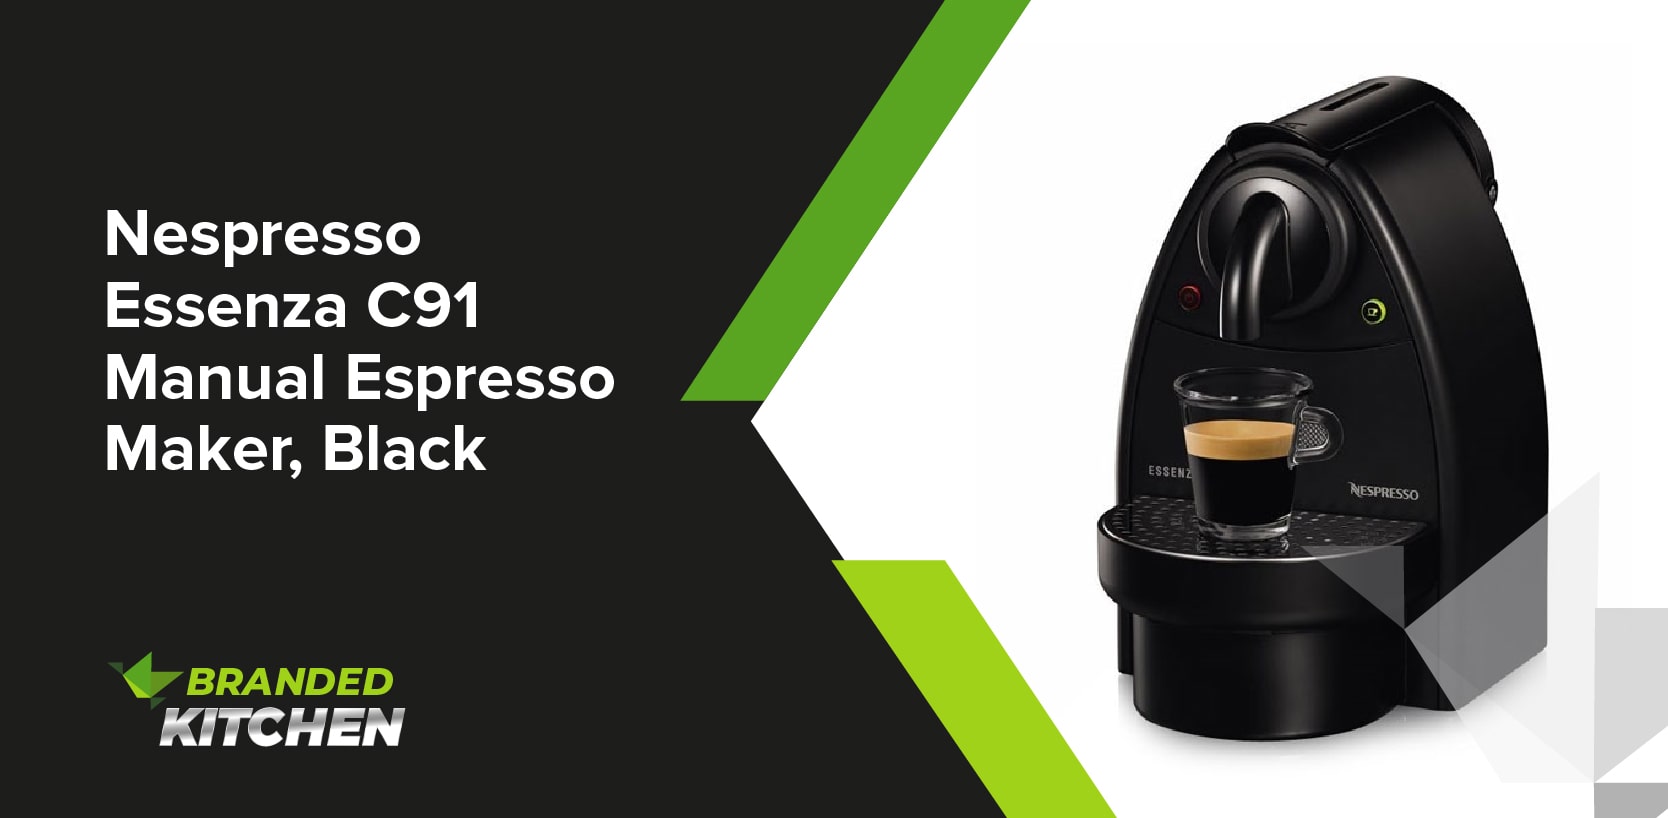 Nespresso Essenza C91 Manual Espresso Maker, Black